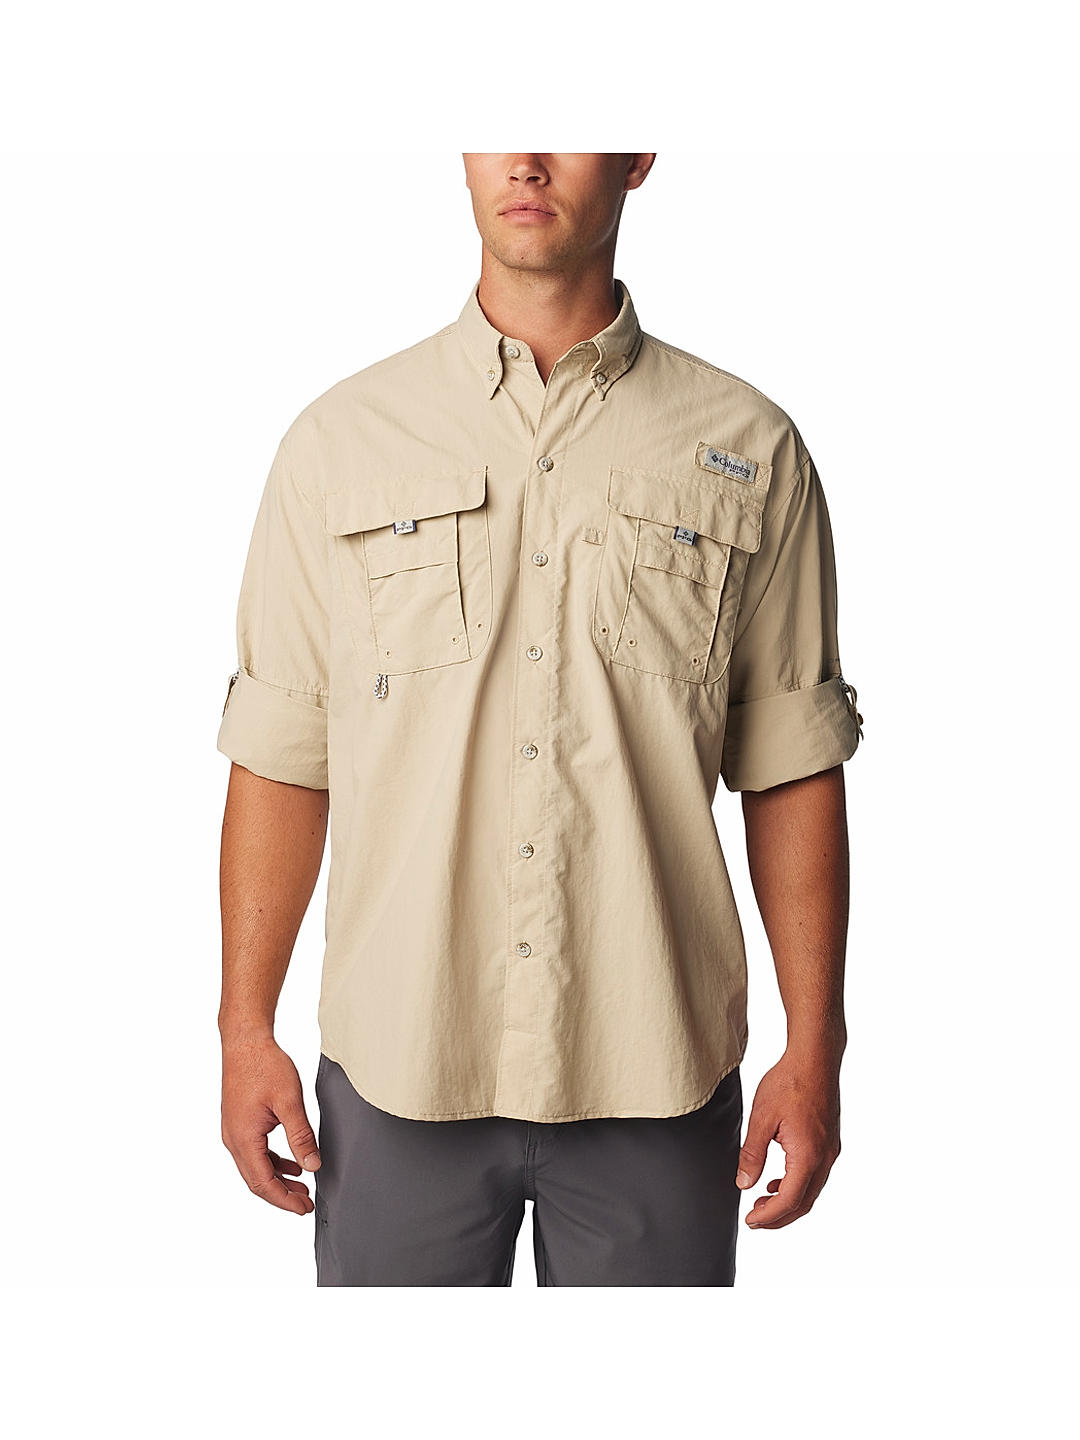 Columbia Men Beige Bahama II Long Sleeve Shirt (Sun Protection)